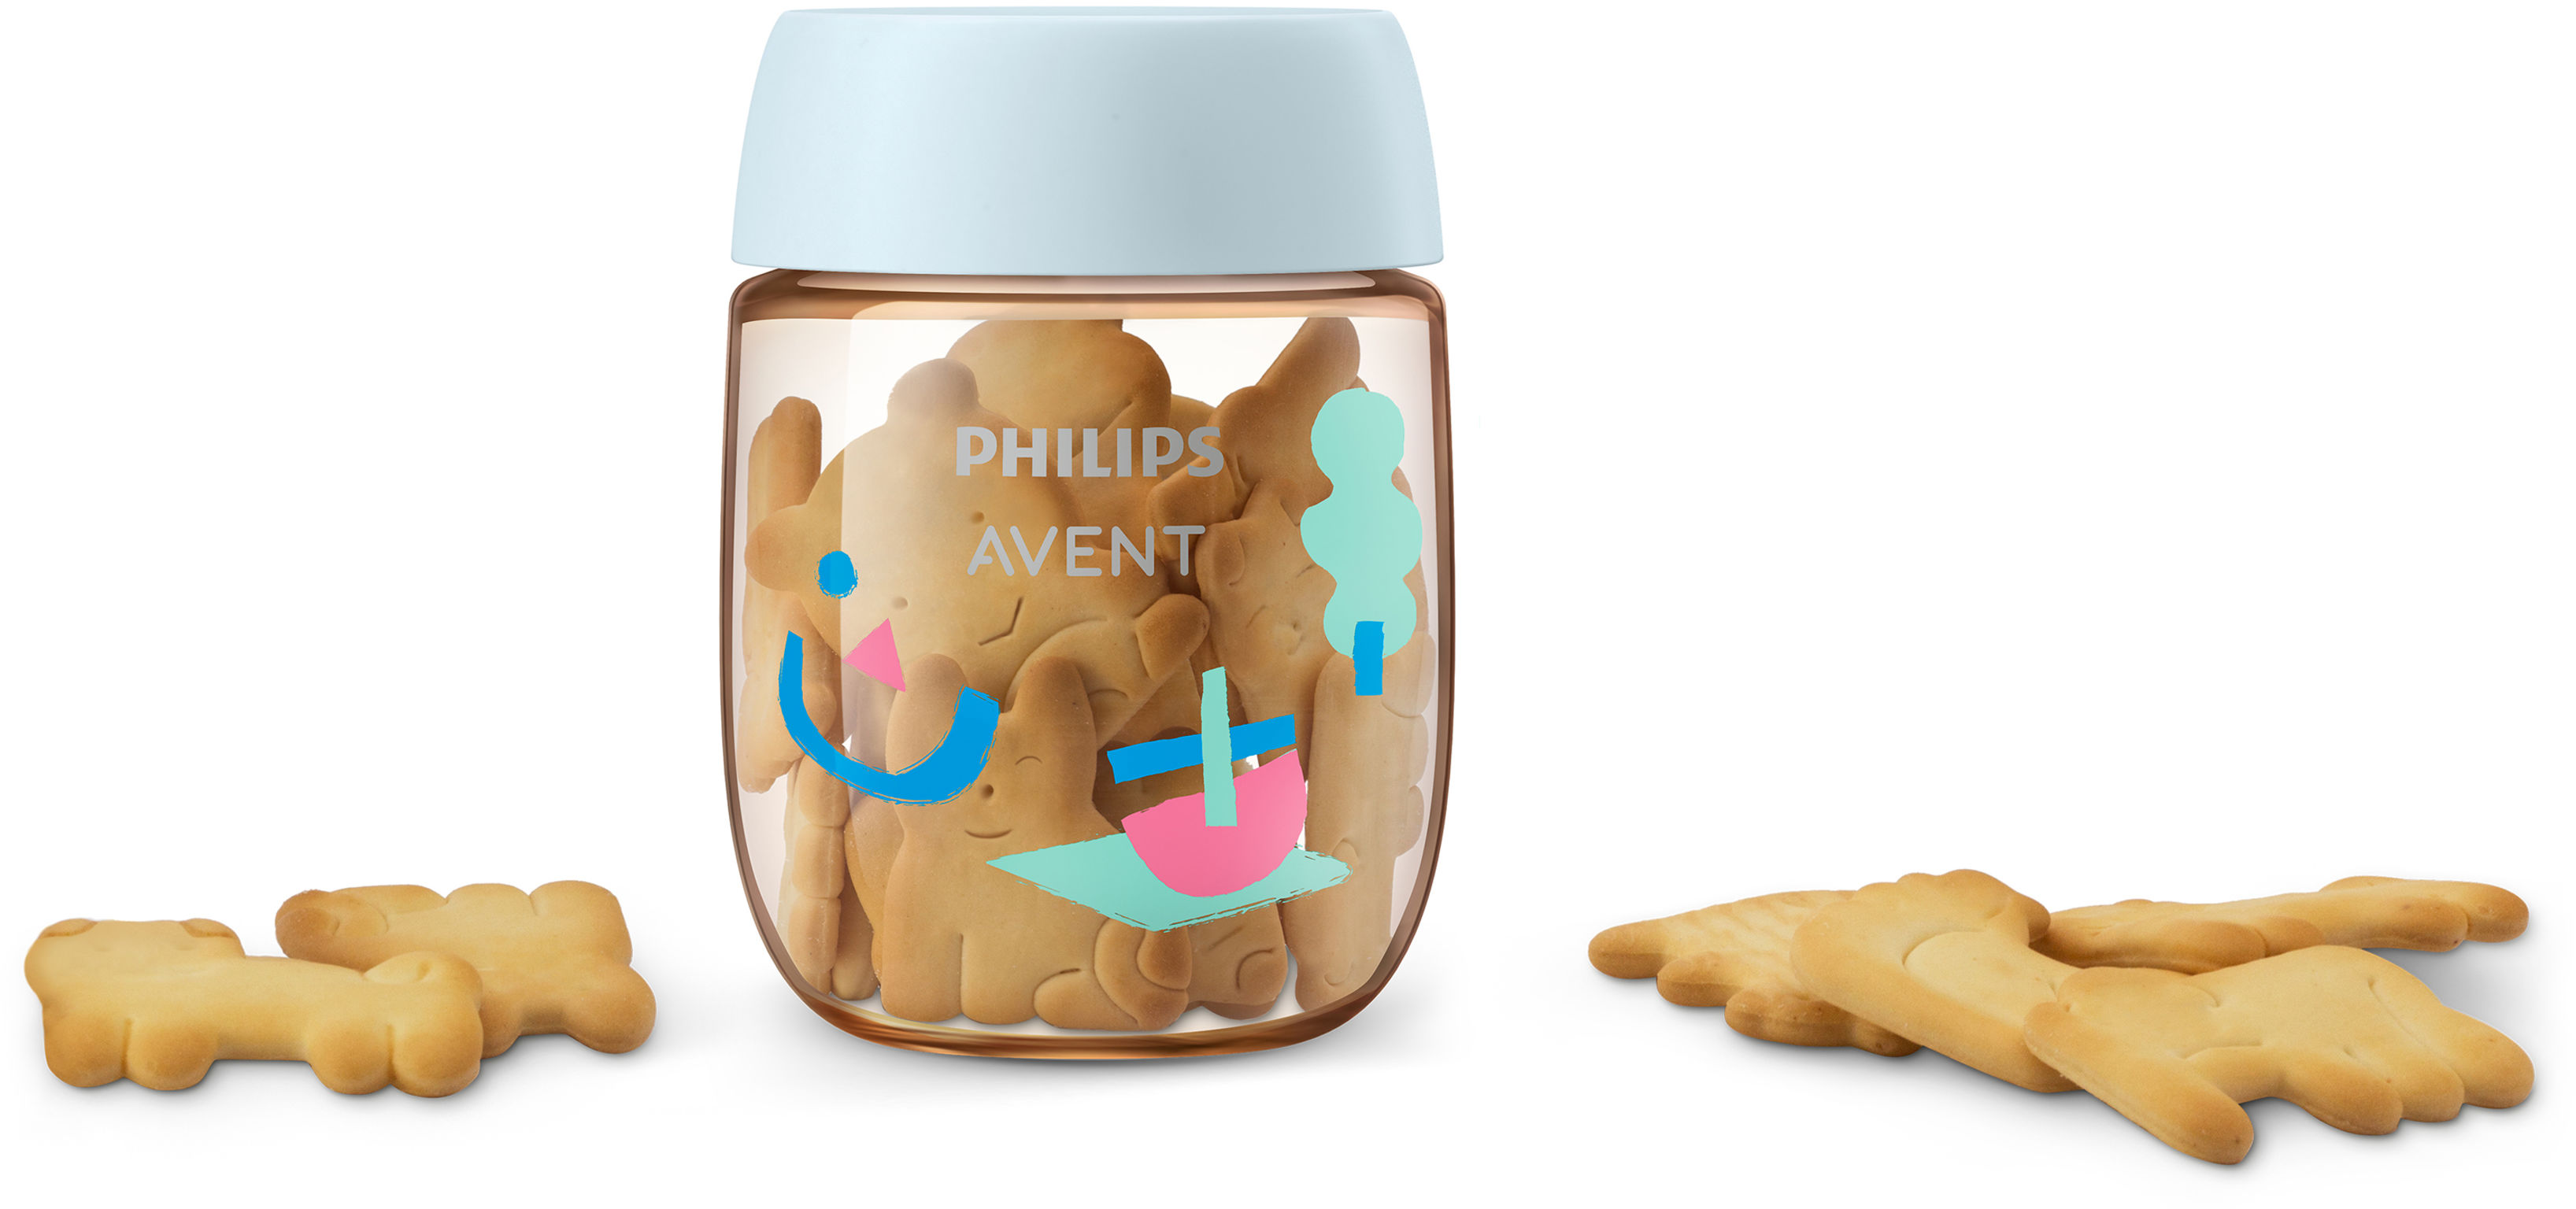 Philips Avent PPSU Bottle Series